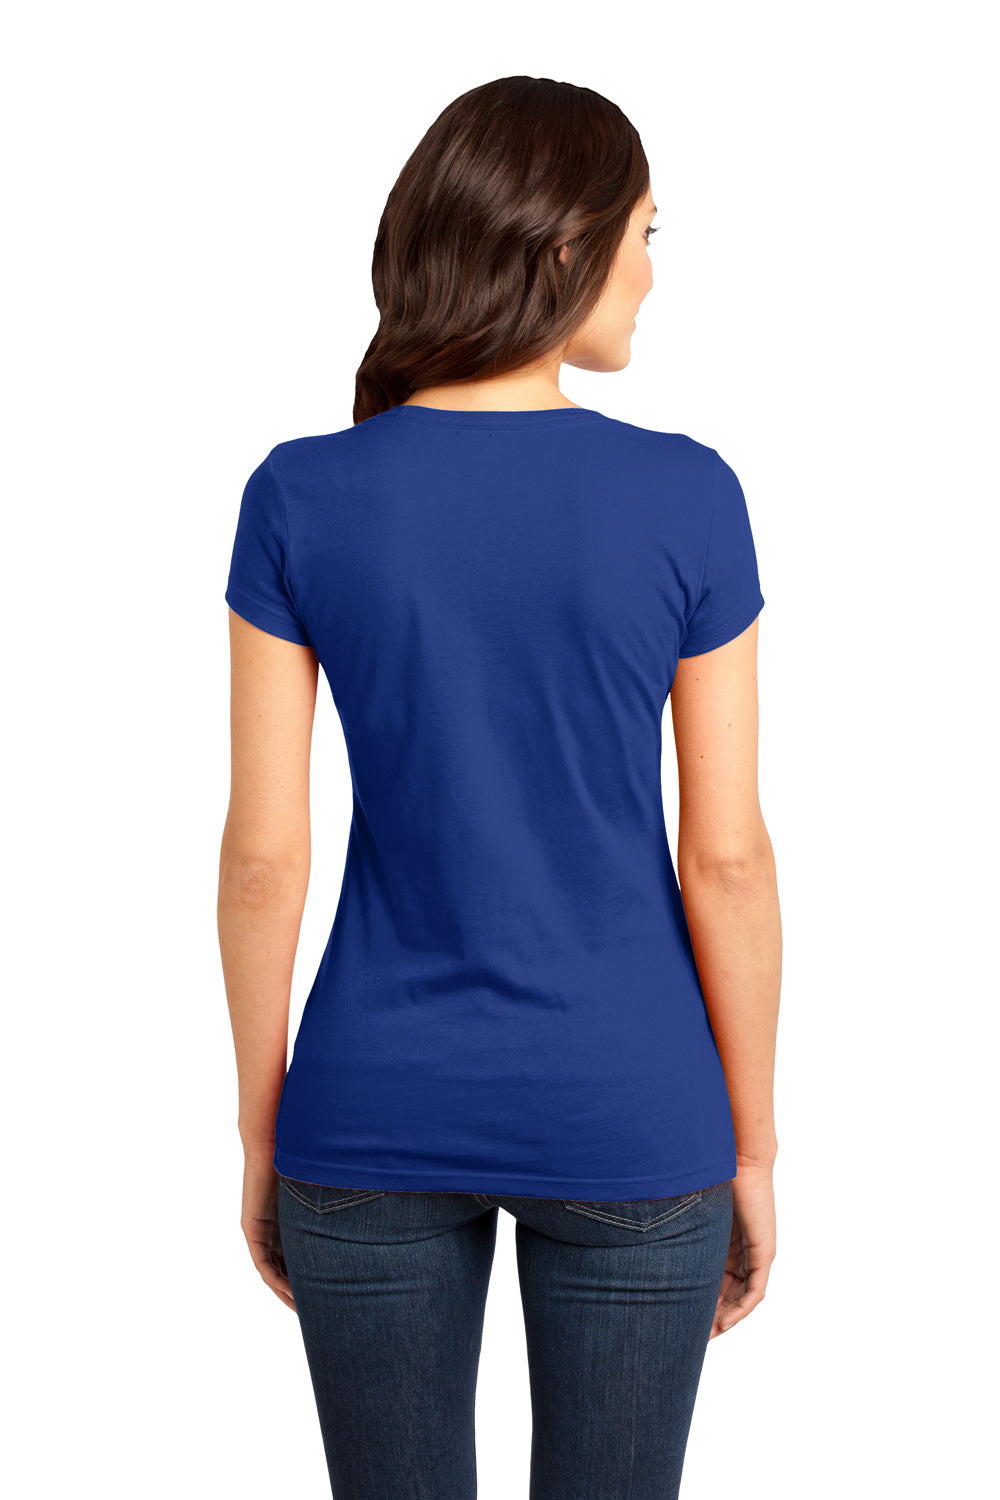 District DT6001 Womens Very Important Short Sleeve Crewneck T-Shirt Royal Blue Back